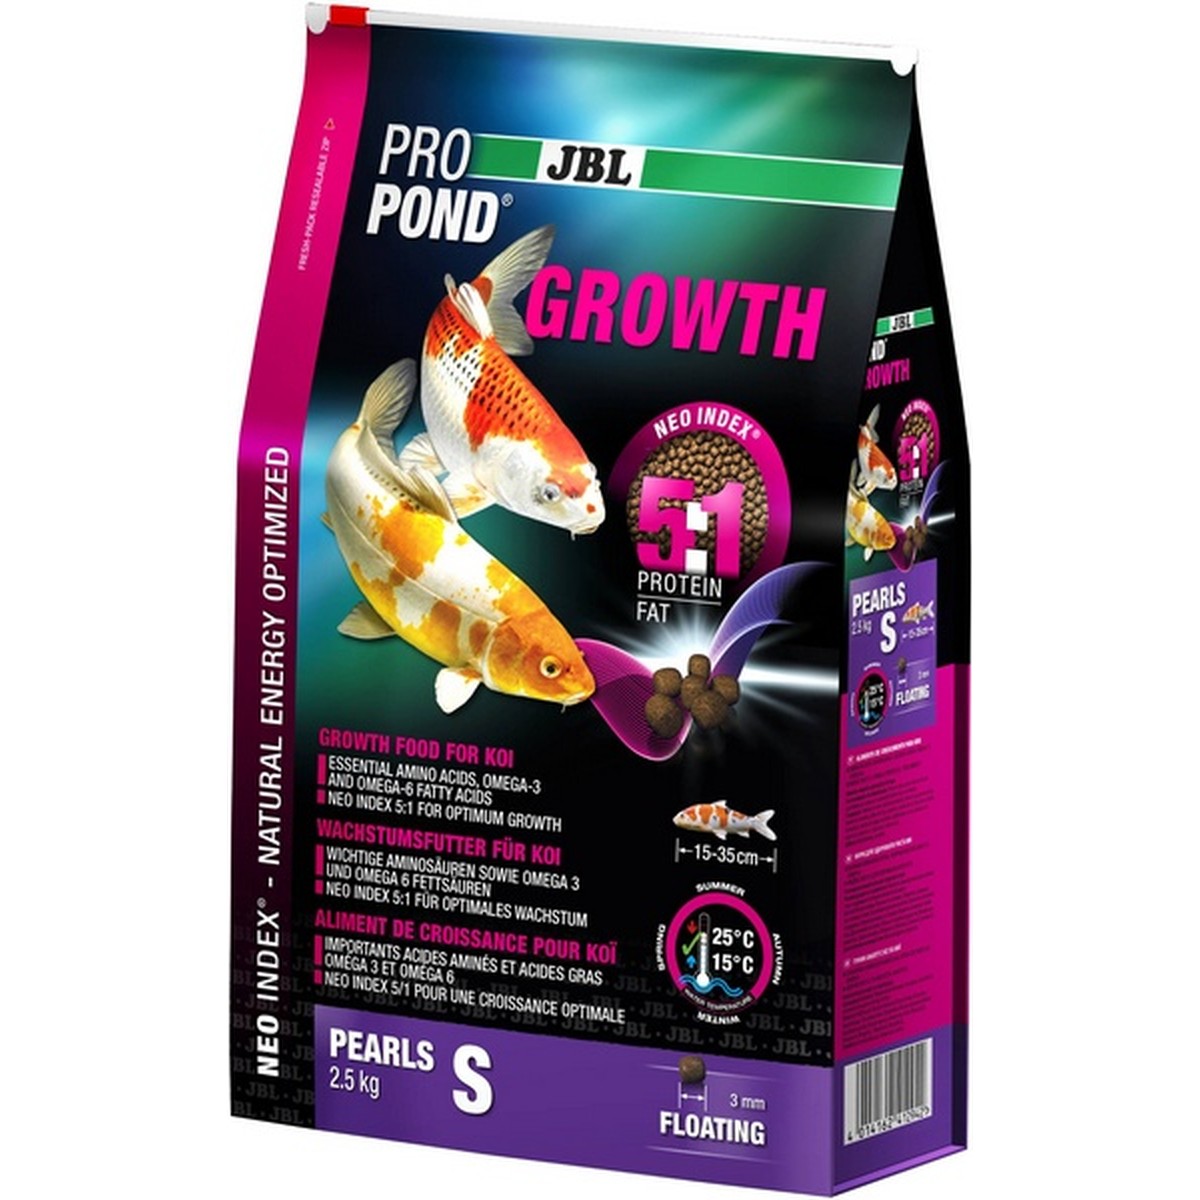   JBL ProPond Growth S, 2,5 kg  2.5kg